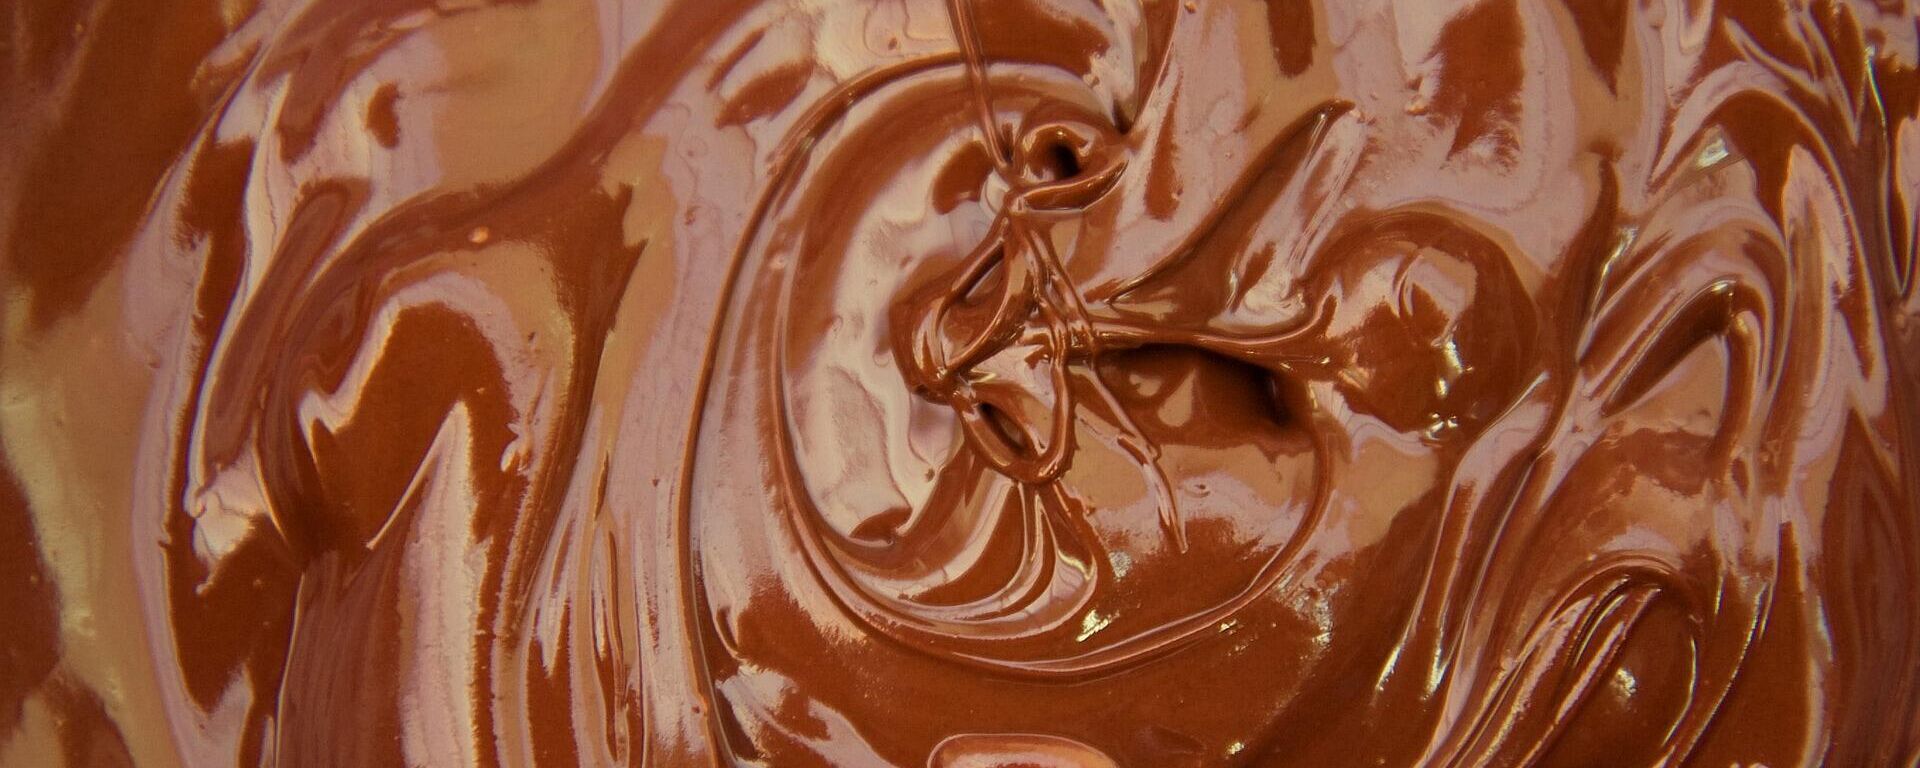 Dulce de leche. Chocolate. Imagen referencial - Sputnik Mundo, 1920, 11.10.2021